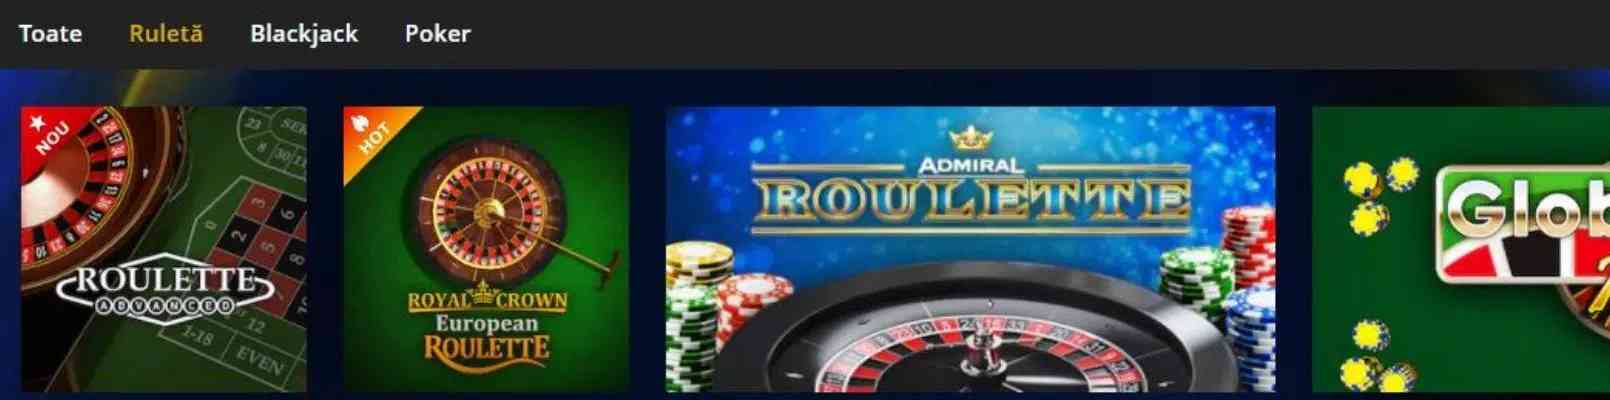 admiral ruleta 2021 casino